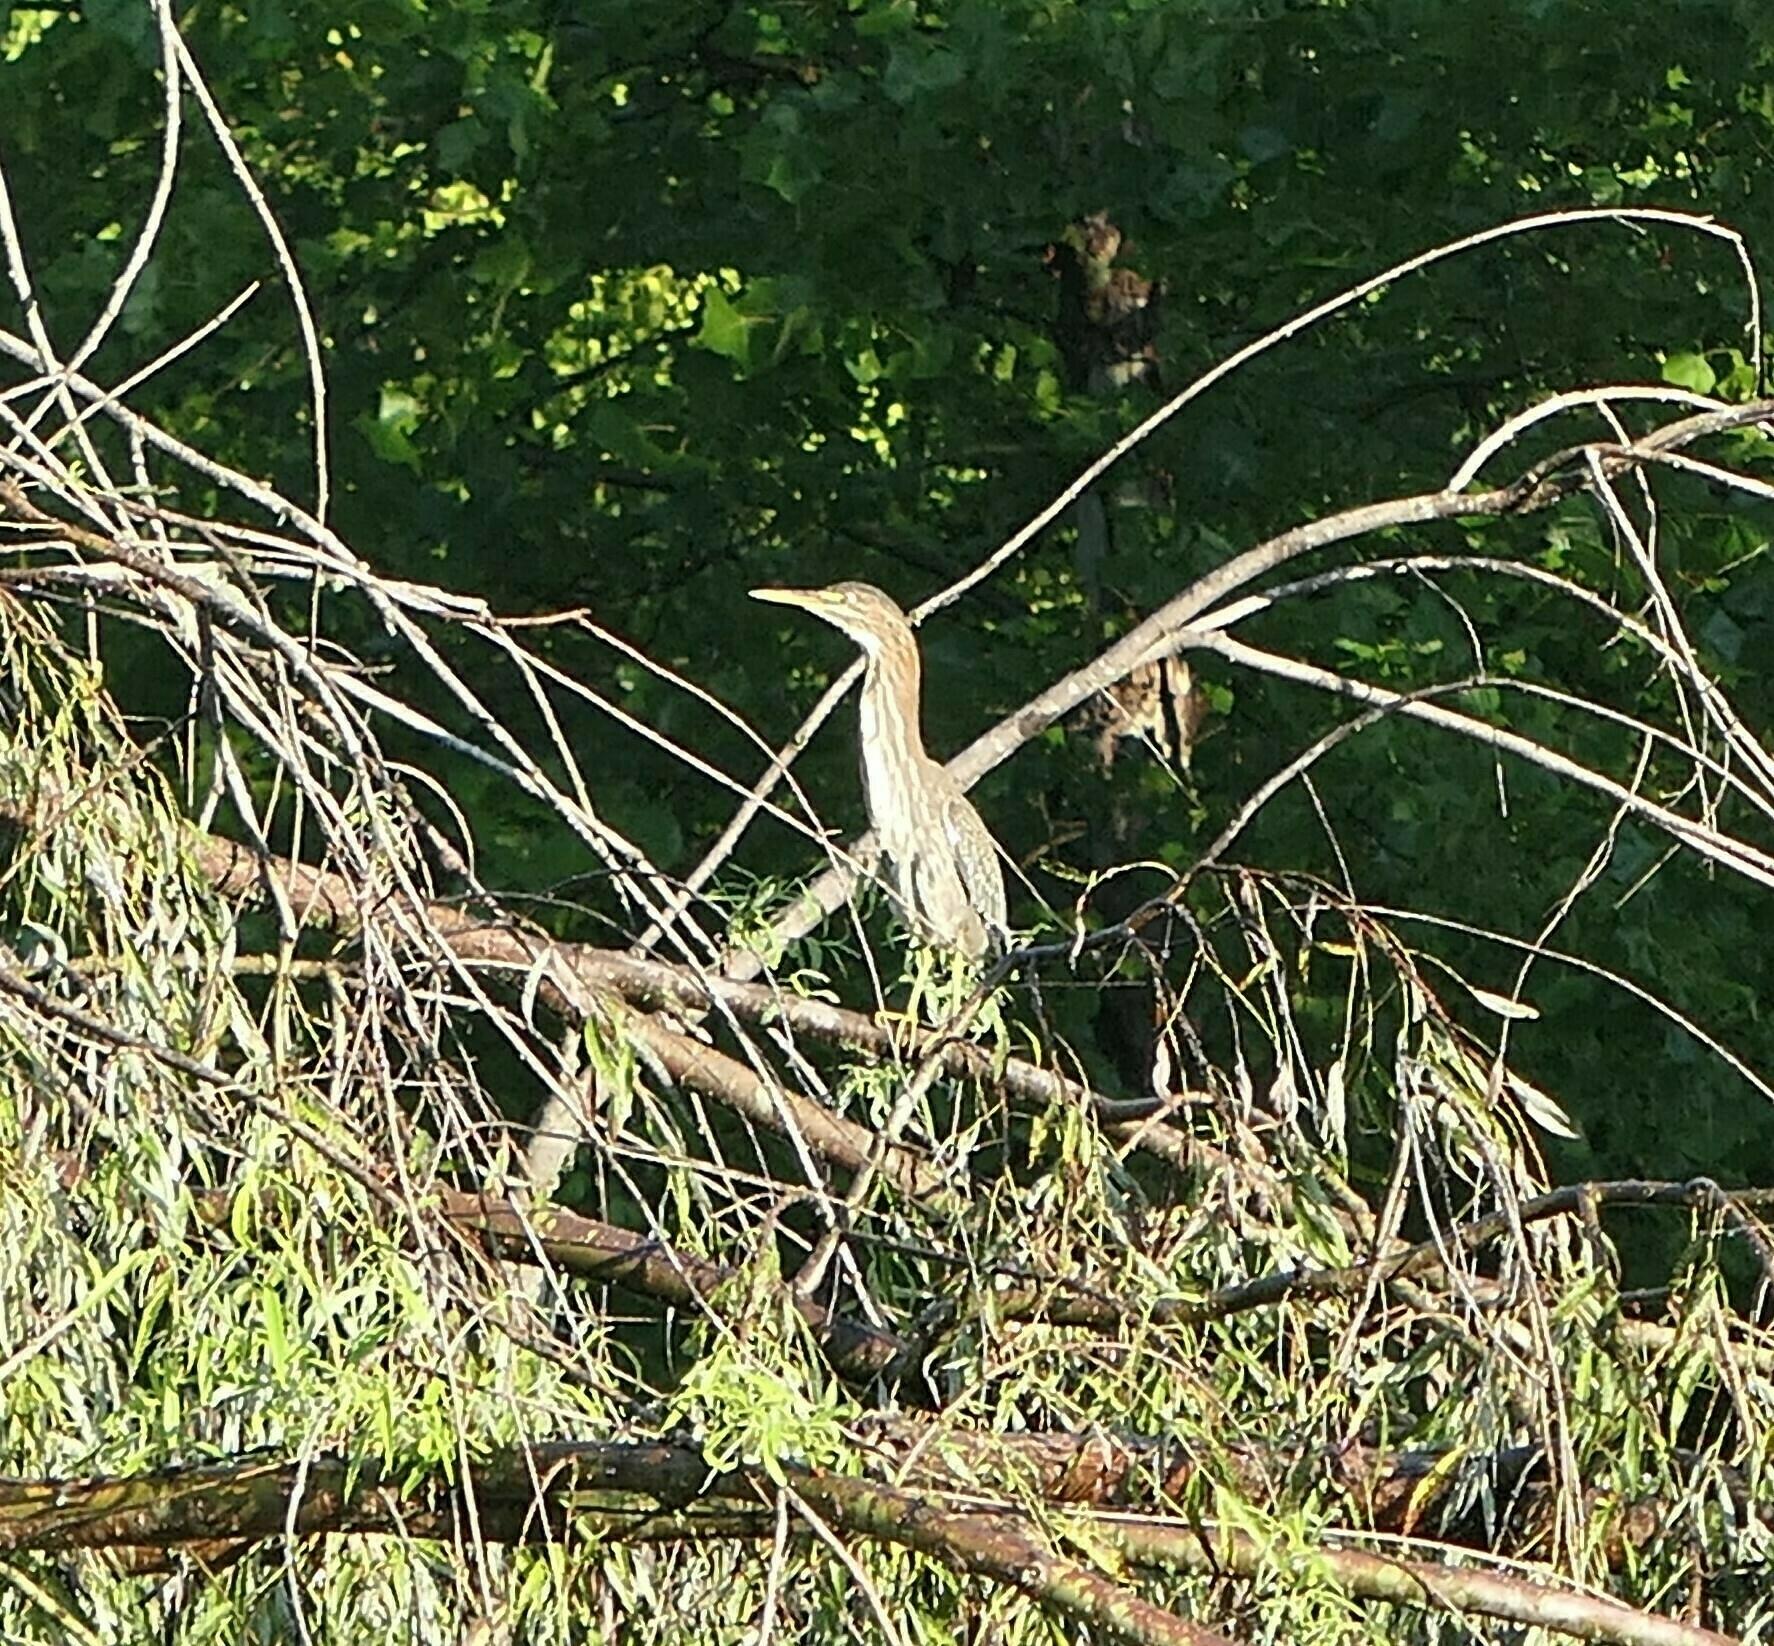 green heron on a tree branch, looking alert